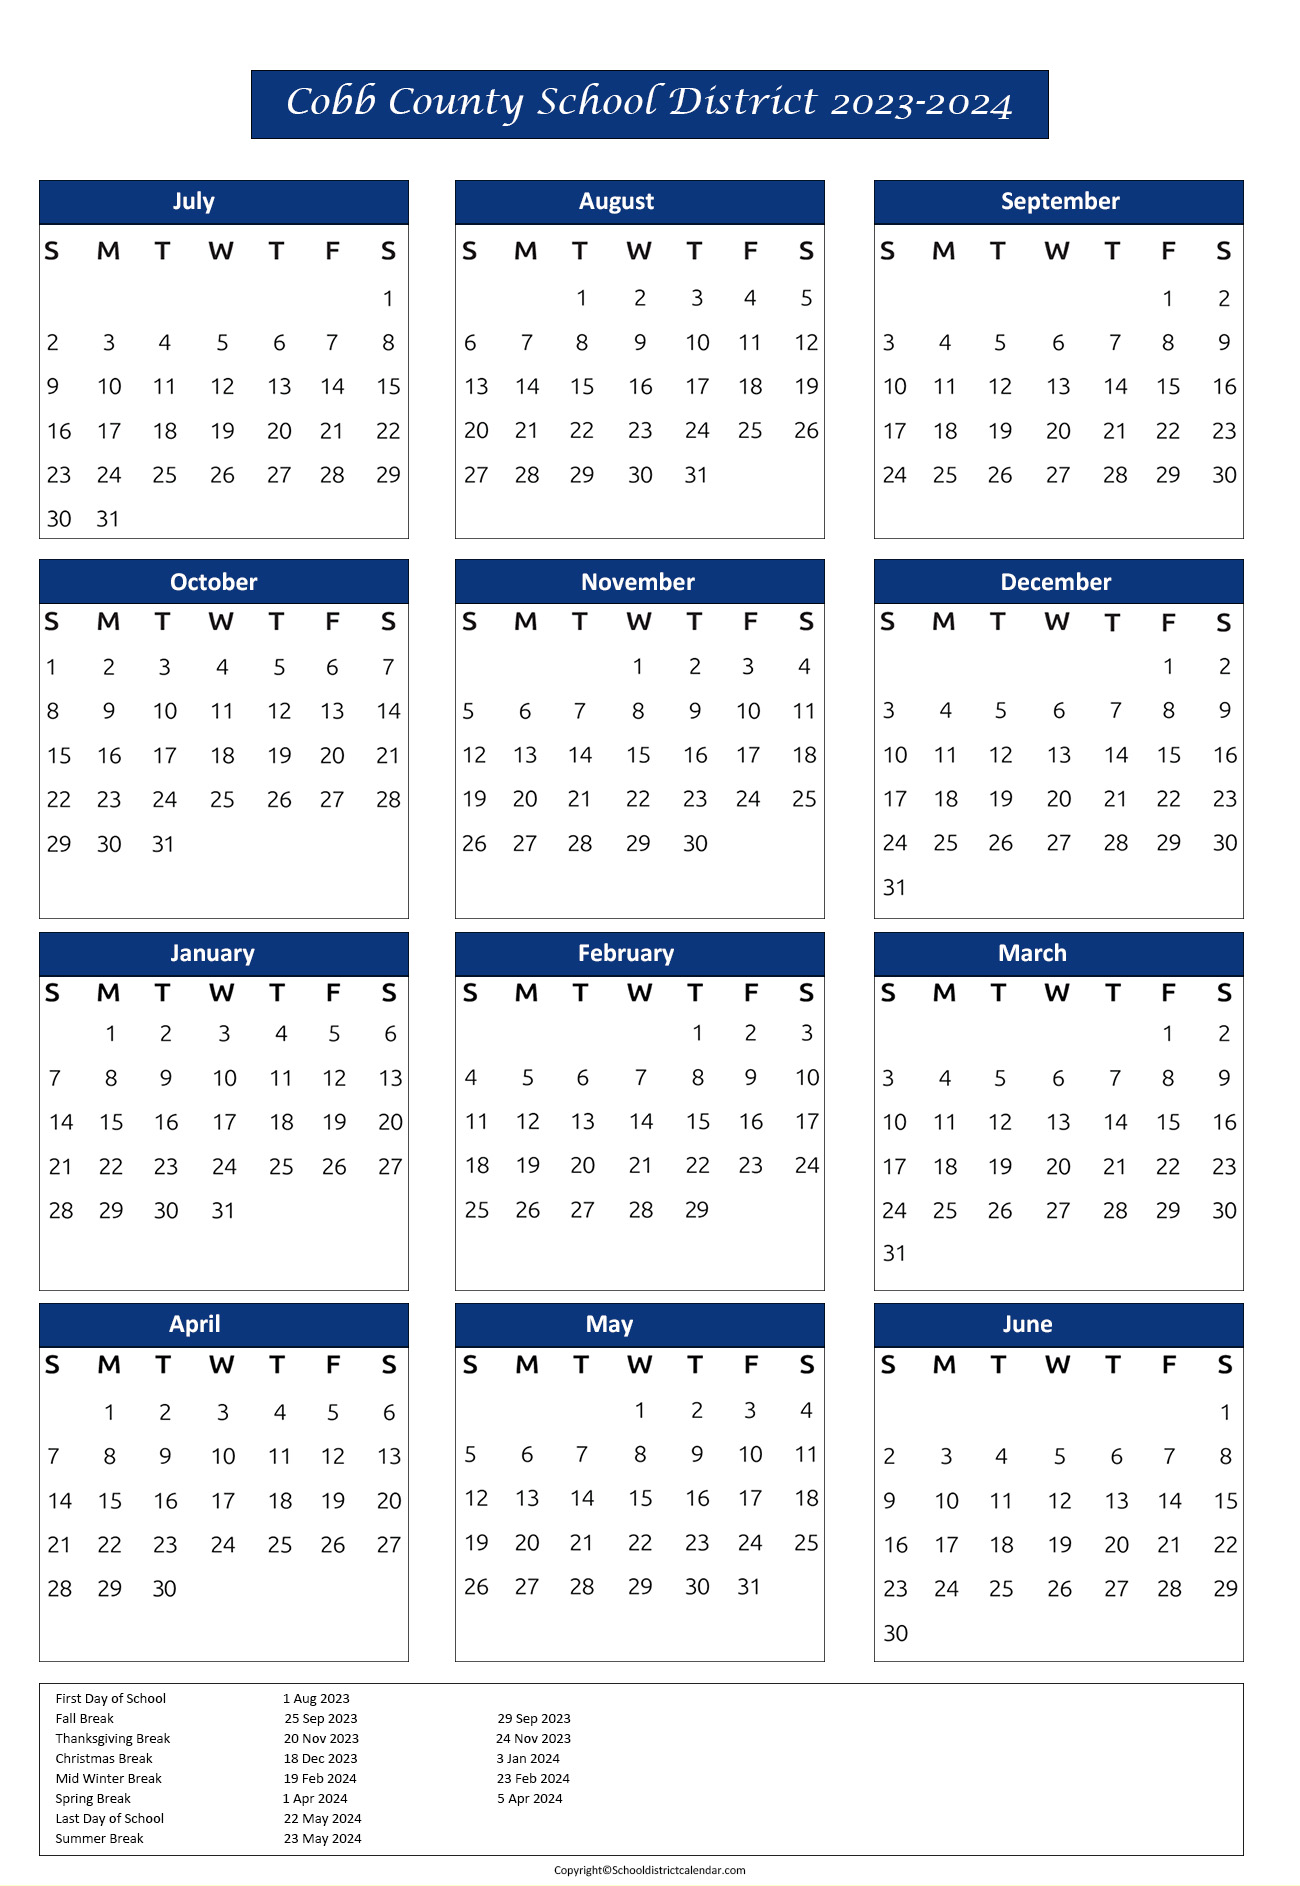 Cobb County School District Calendar Holidays 2023 2024